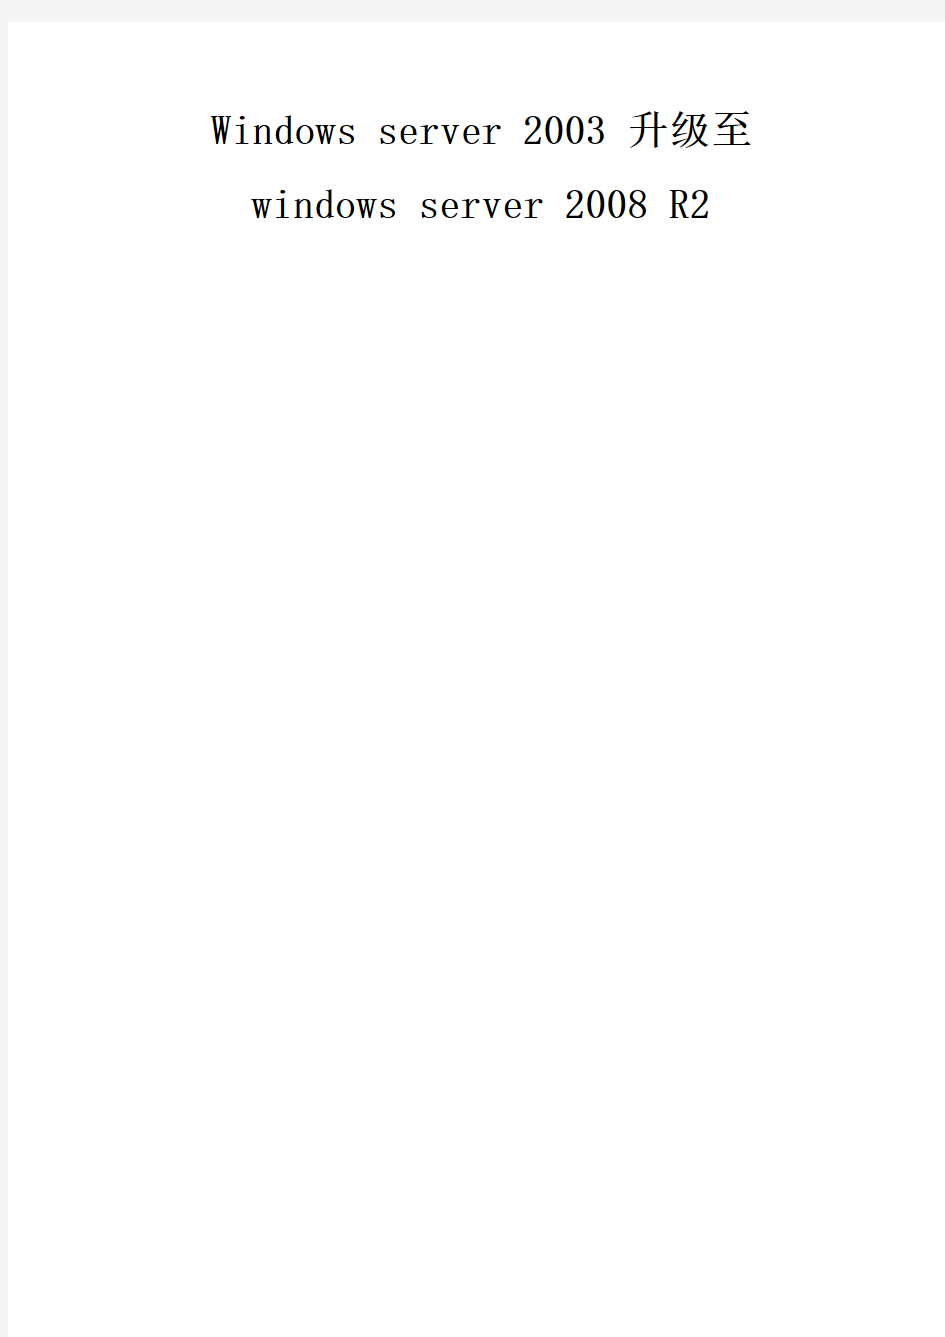 windows server 2003至2008R2的迁移